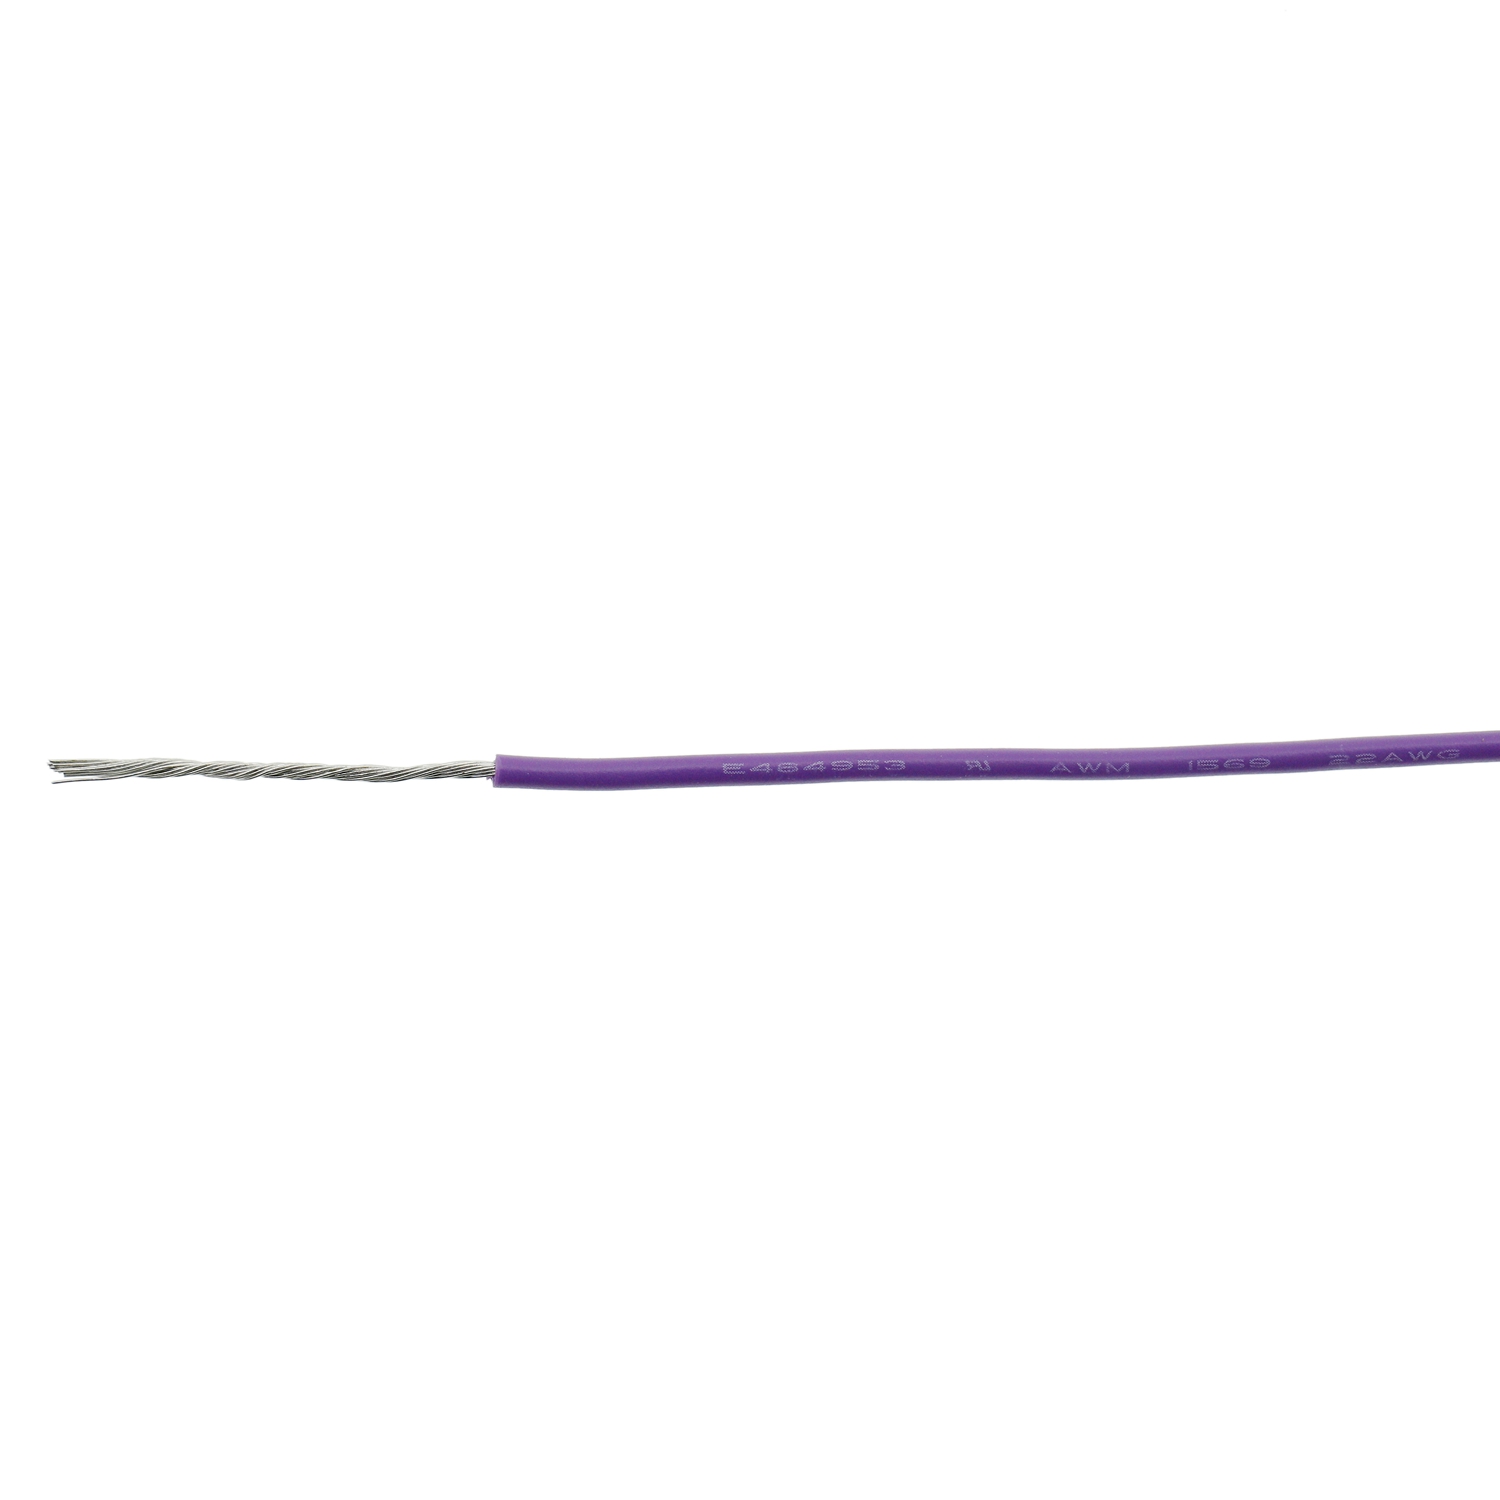 Cable de conexión UL1569 22AWG para cableado interno de electrodomésticos